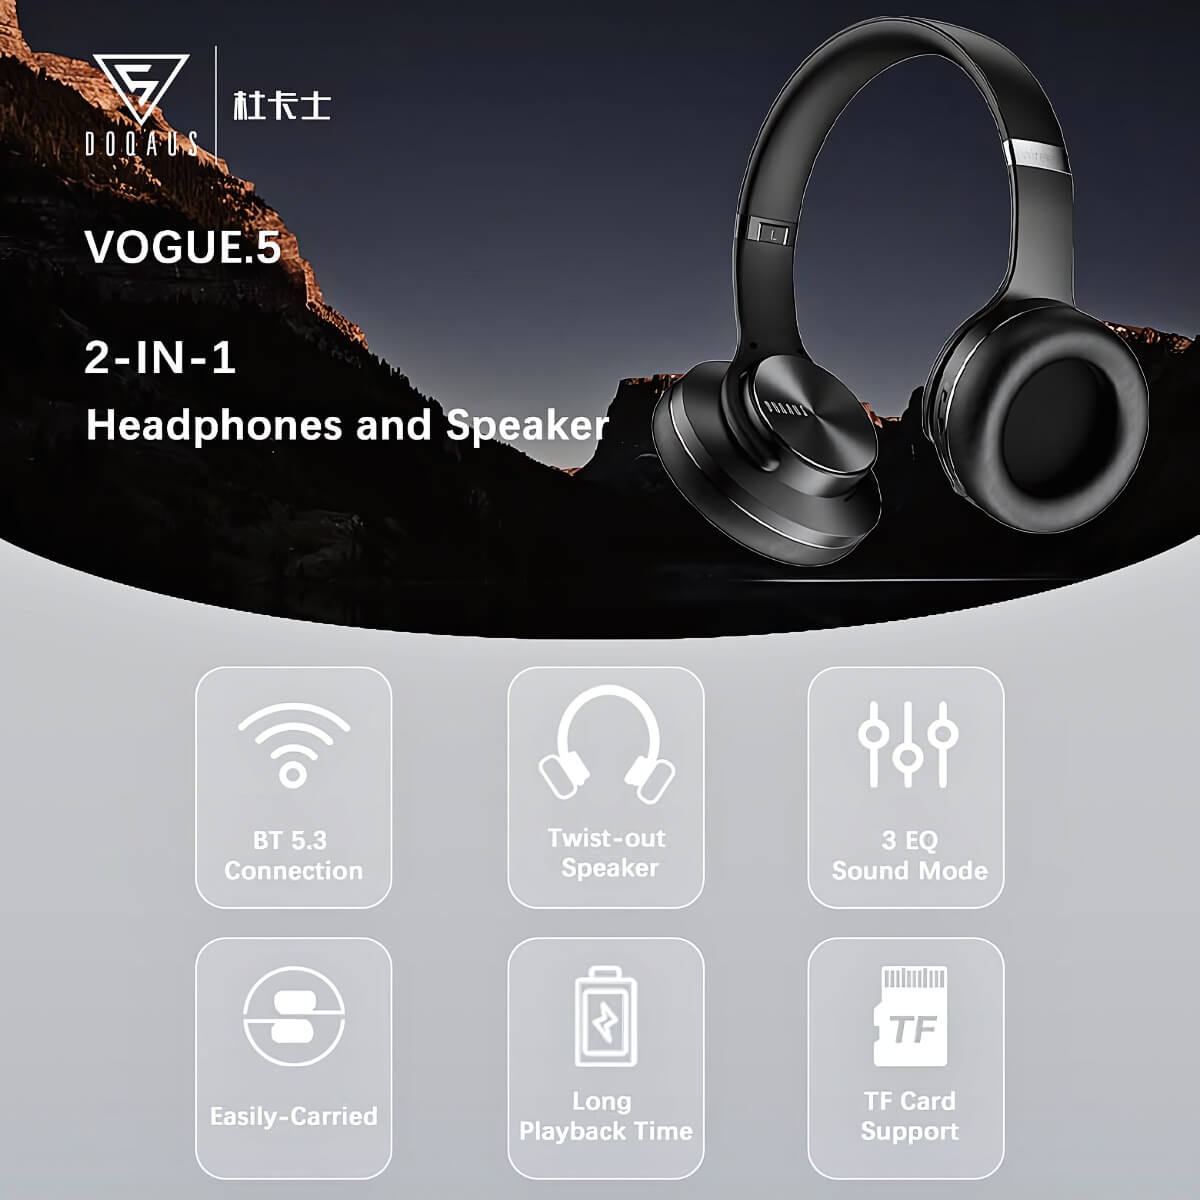 DOQAUS VOGUE 5 Bluetooth Headphones - Hugmie